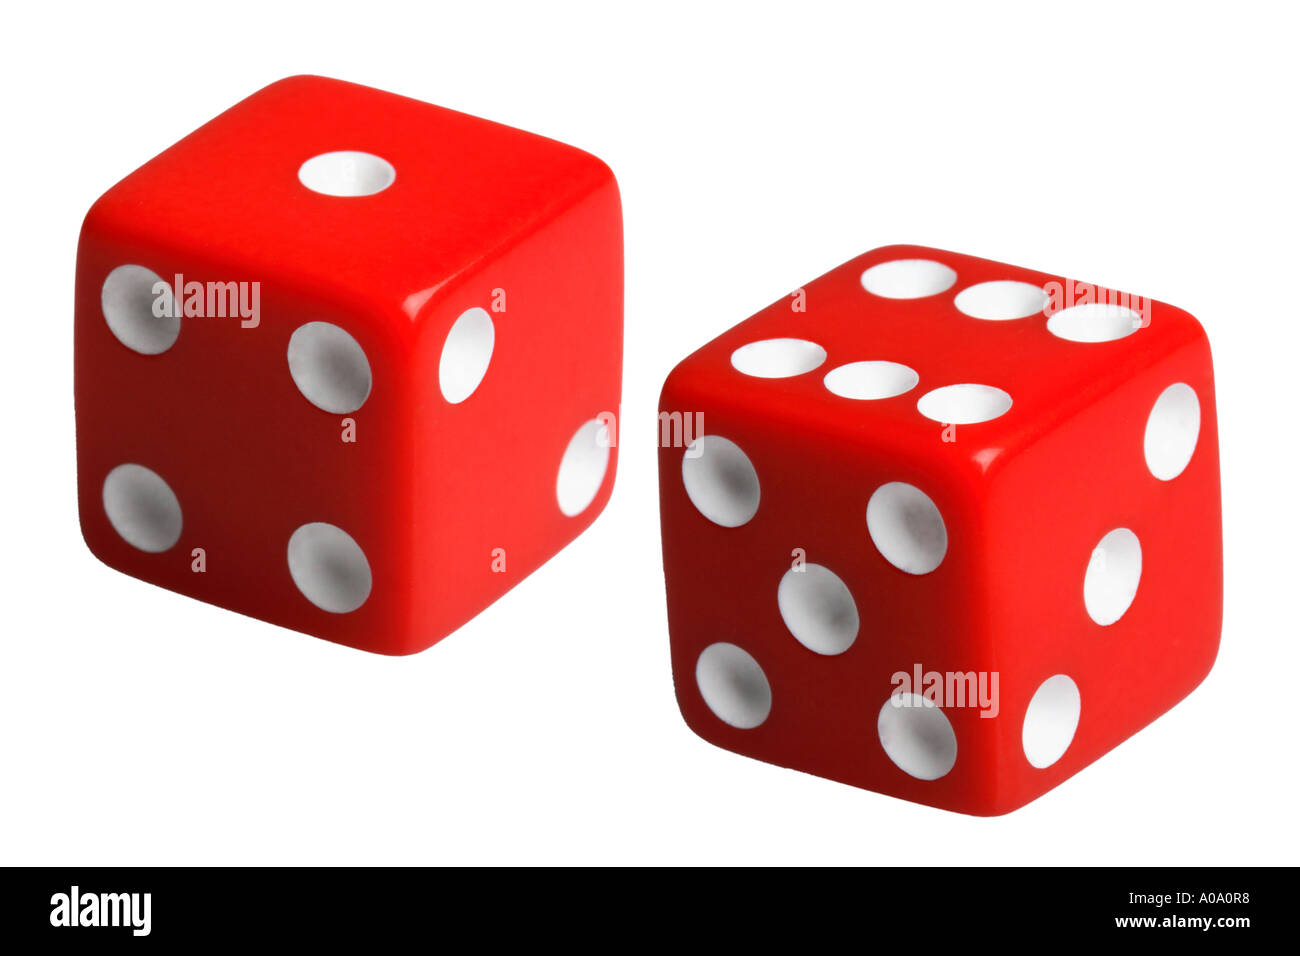 Pair of dice Stock Photo